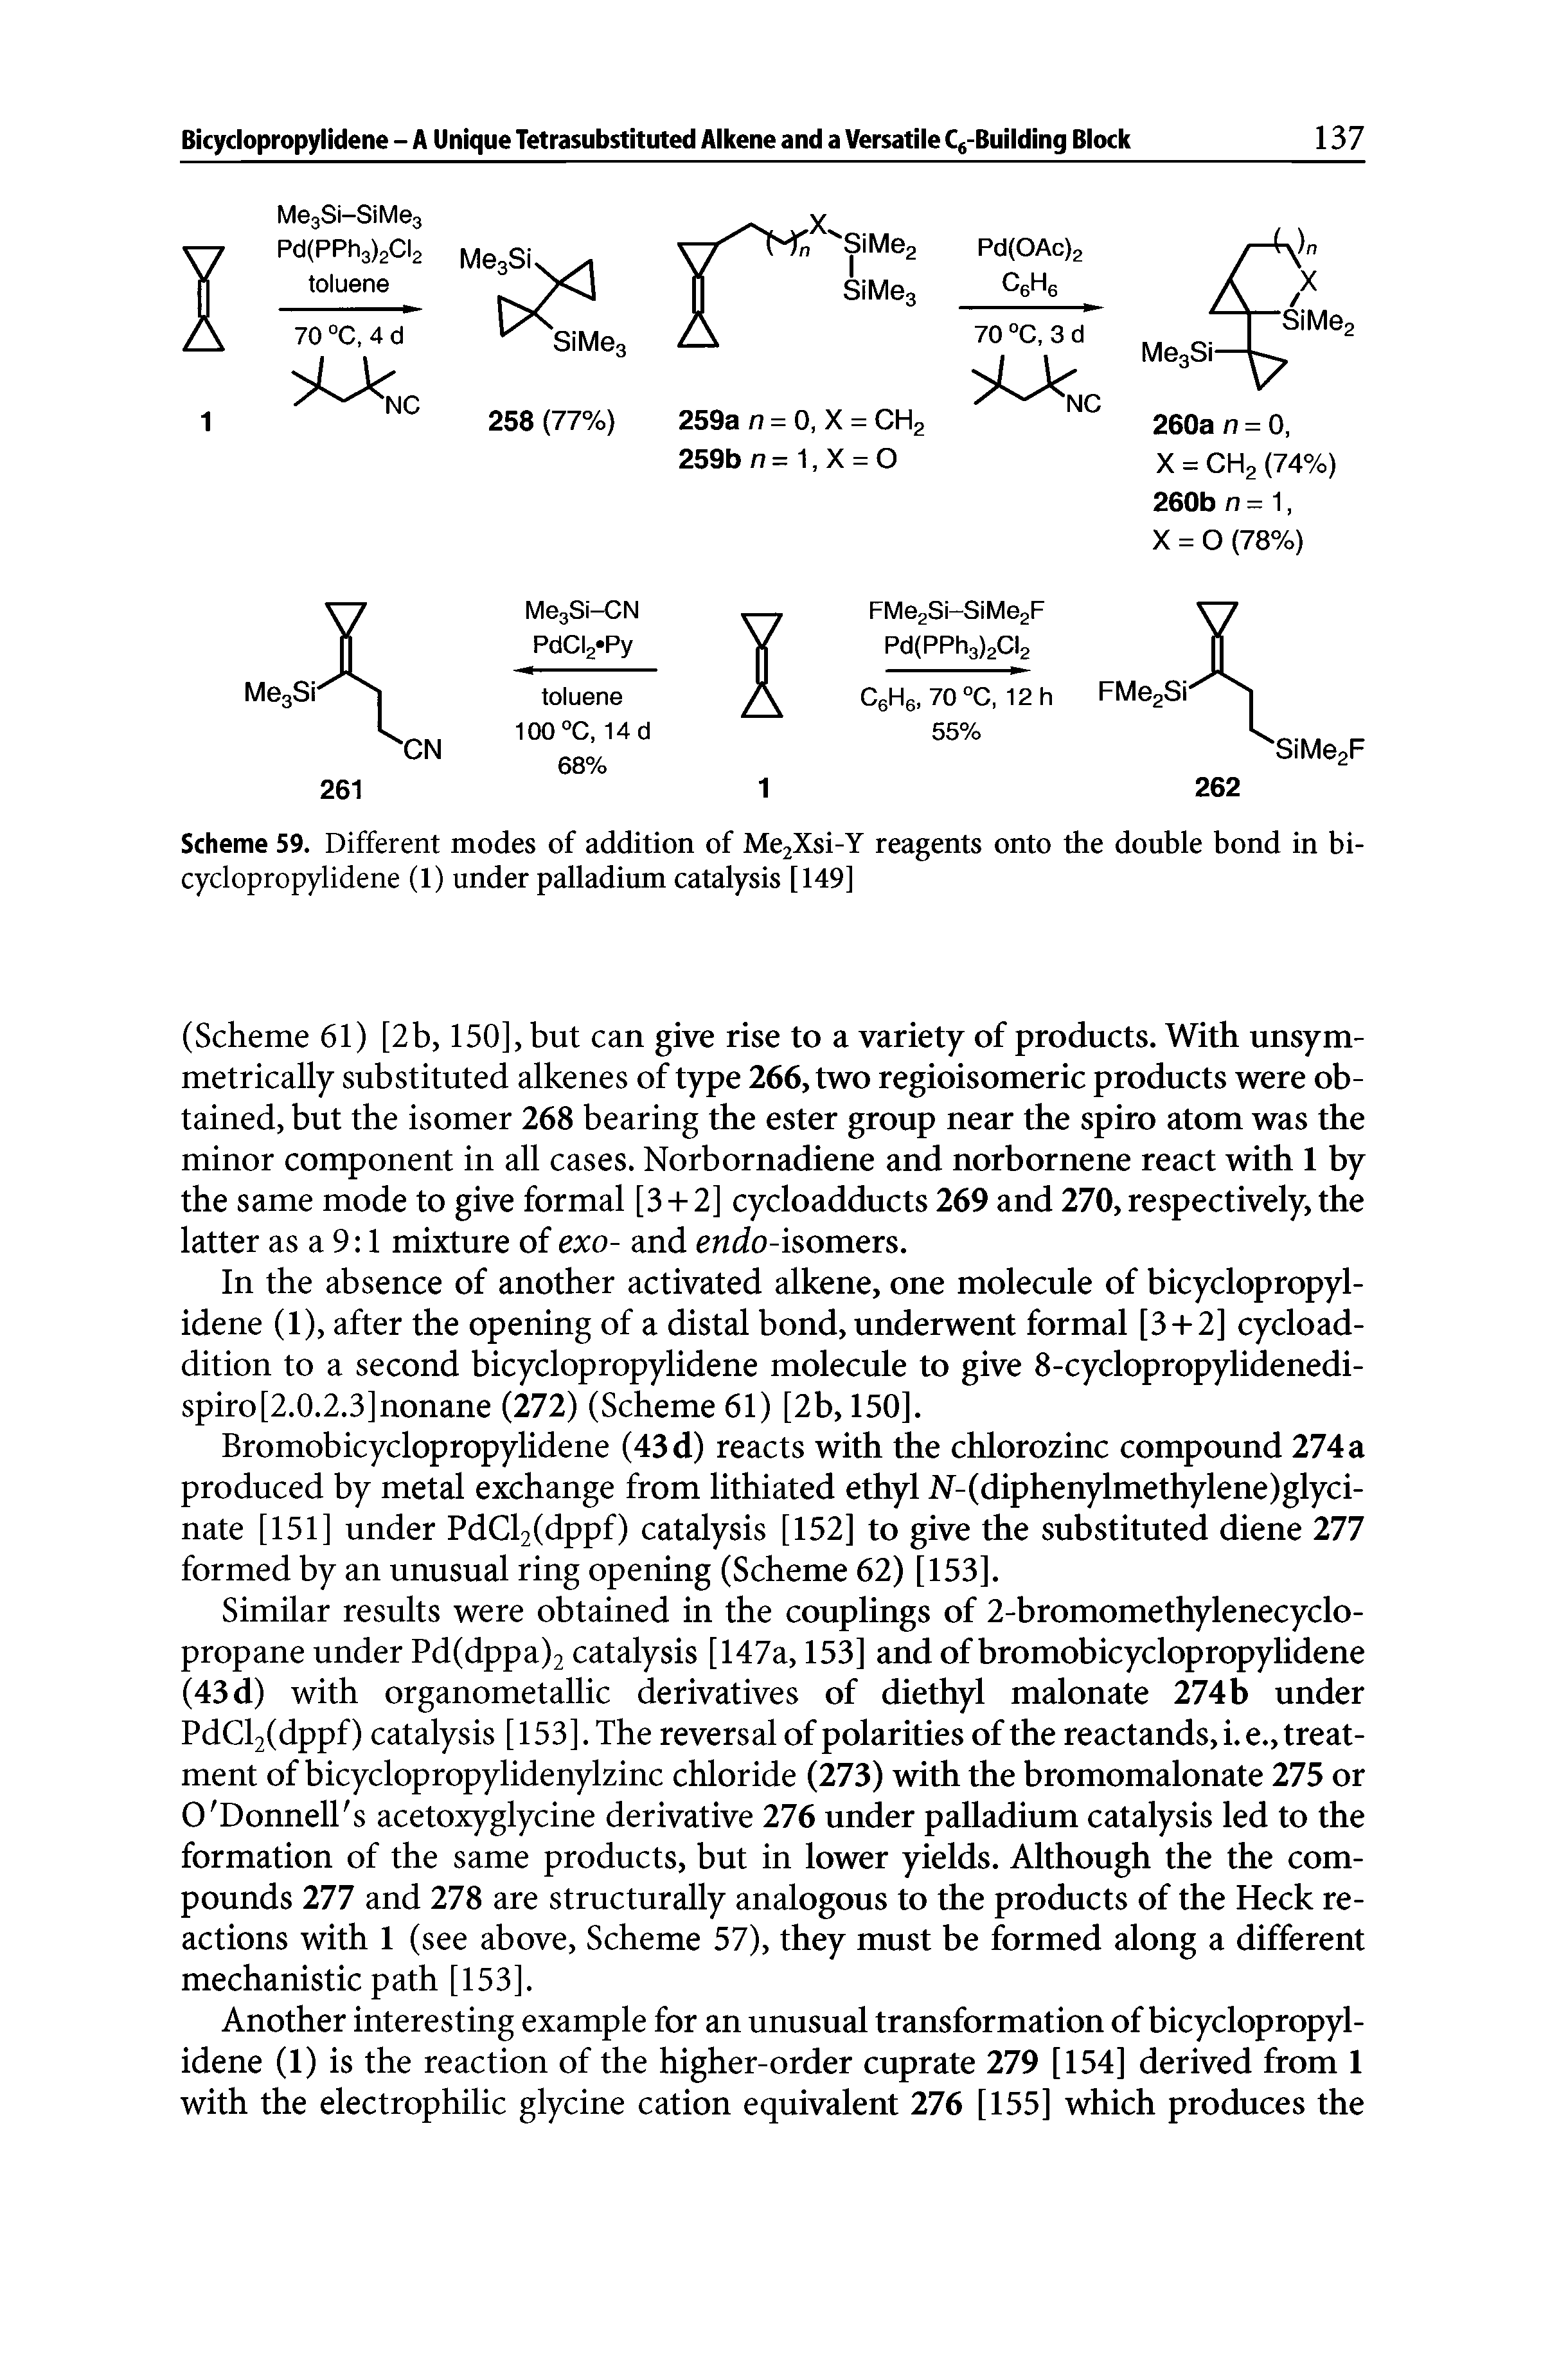 Scheme 59. Different modes of addition of MegXsi-Y reagents onto the double bond in bicyclopropylidene (1) under palladium catalysis [149]...